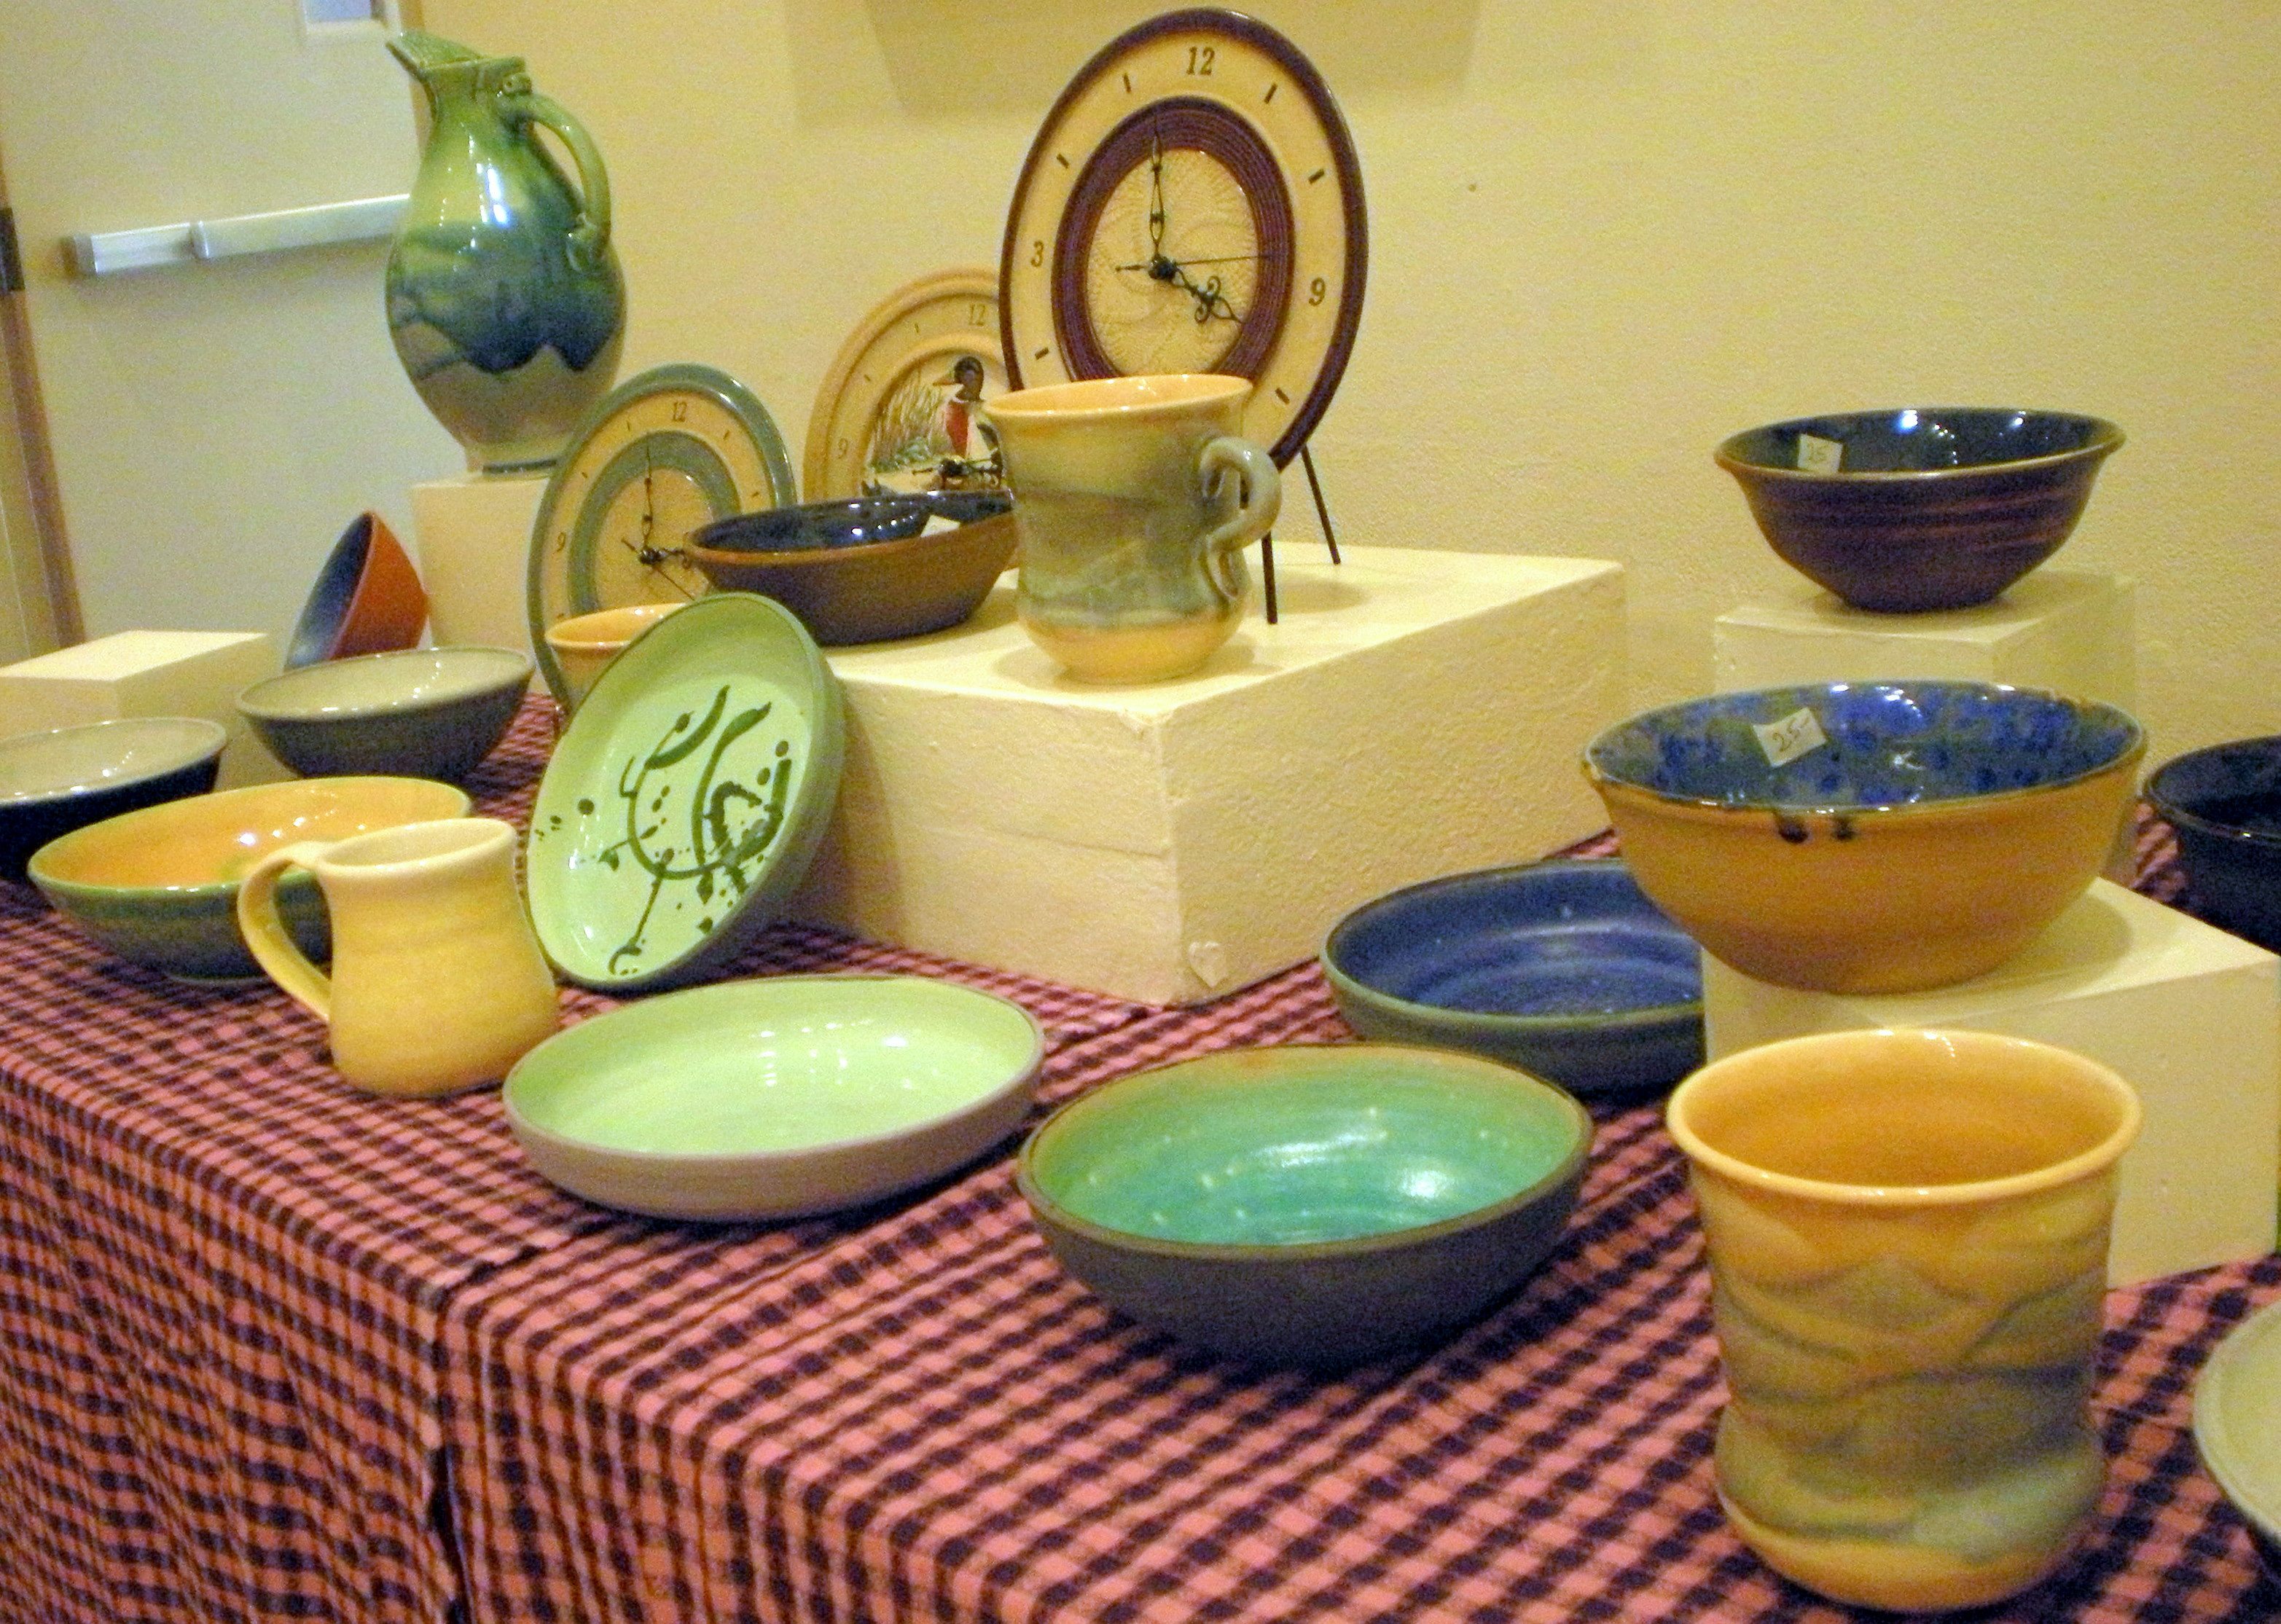 Choice of pottery